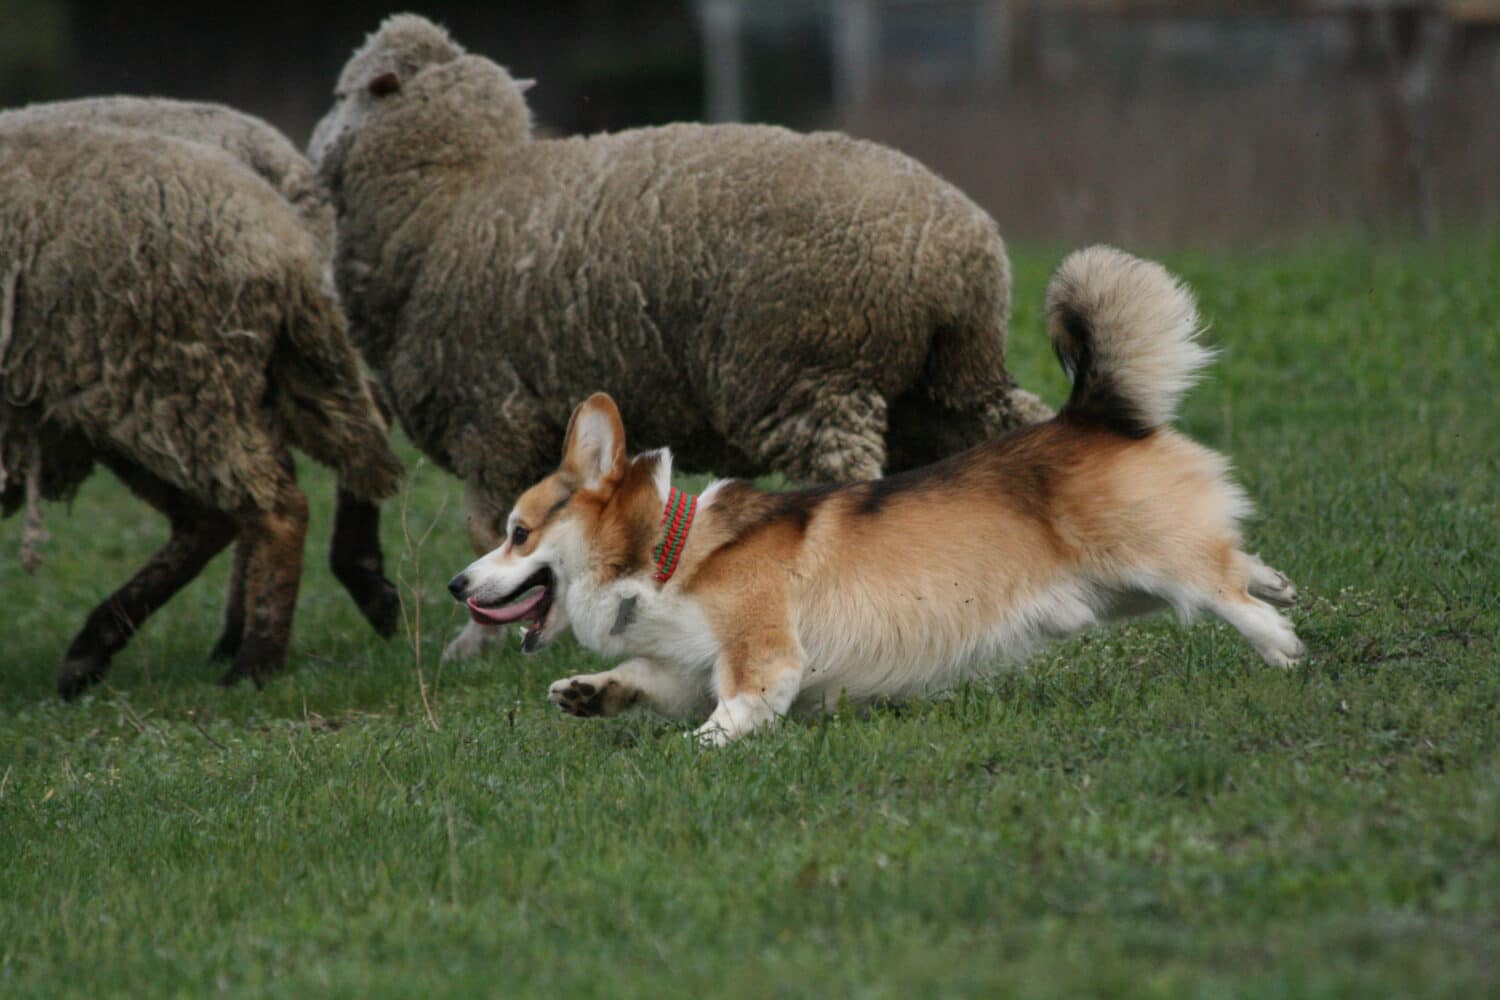 Corgi pebroke herding the sheep on the grass